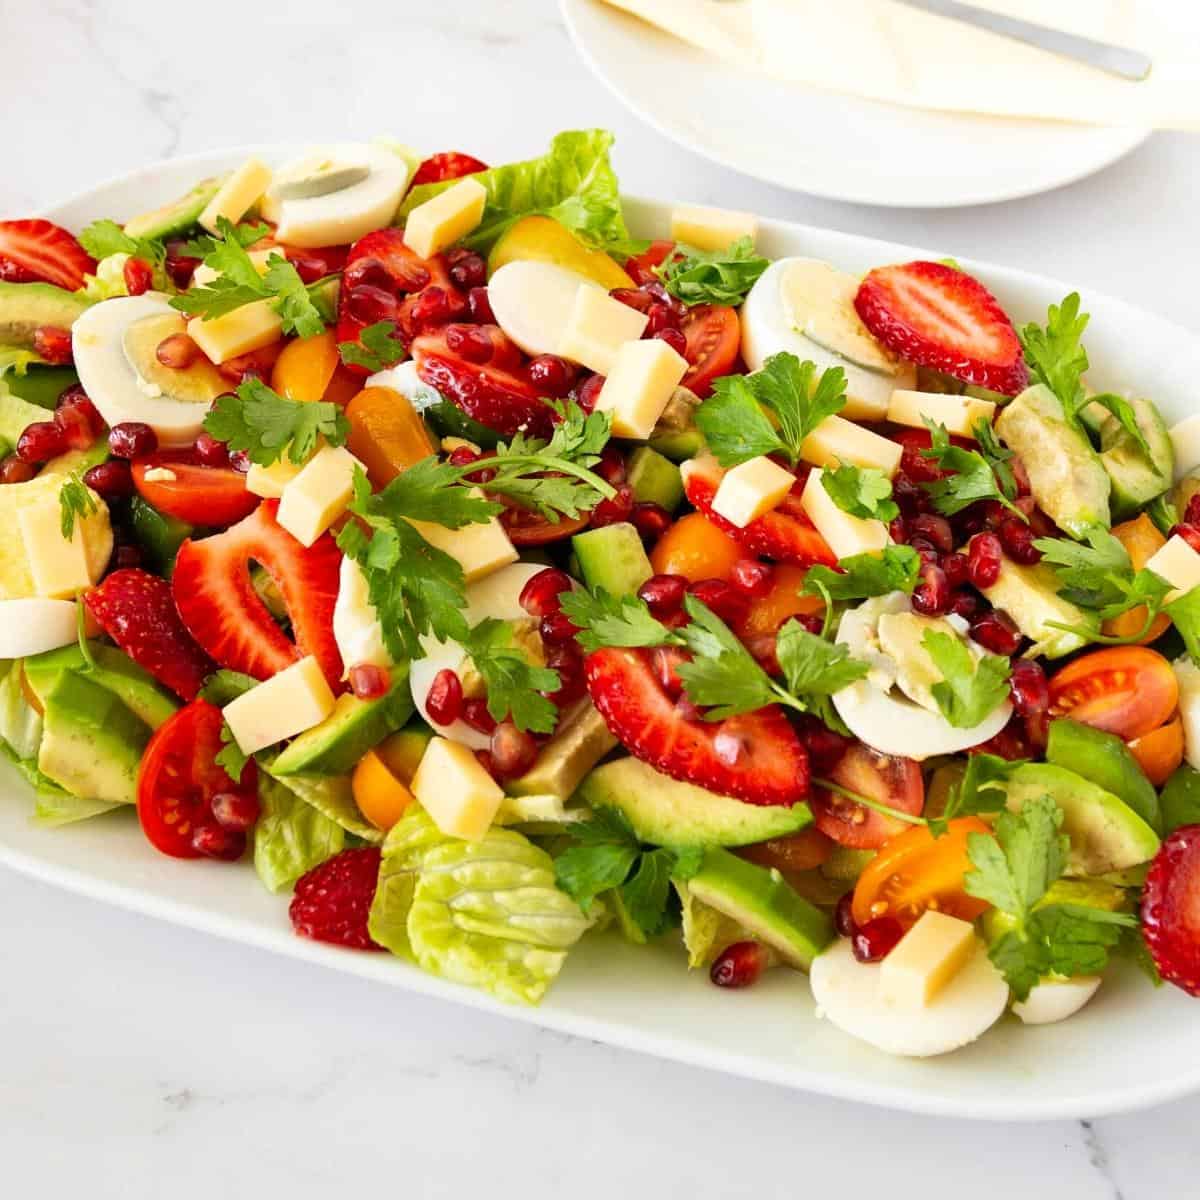 A large platter with garden veggies salad.